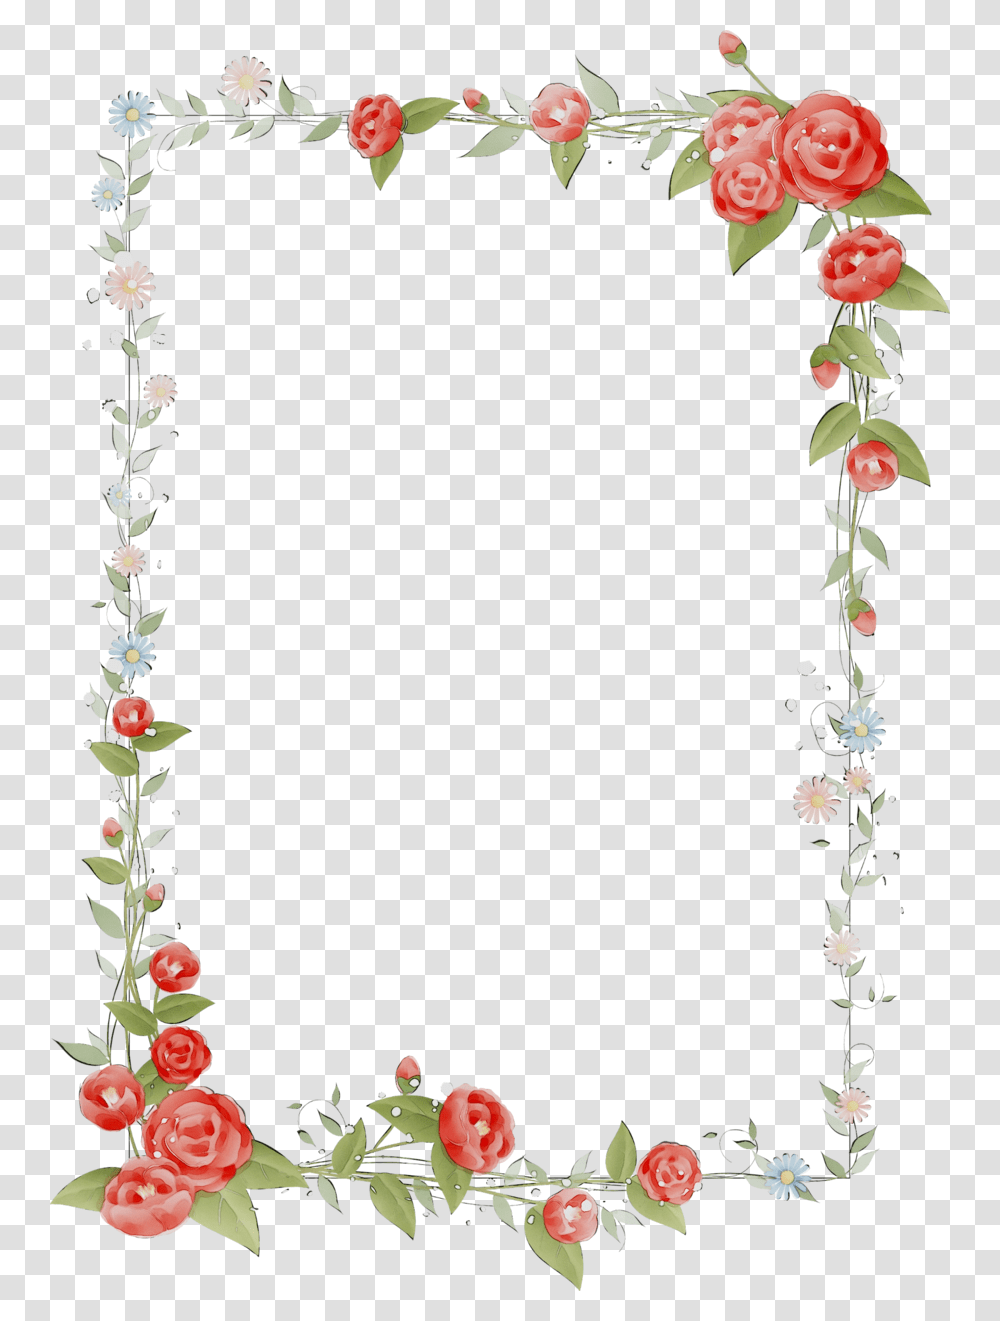 Hearts And Flowers Border Clipart Background Design For Microsoft Word, Plant, Flower Arrangement, Vase, Jar Transparent Png